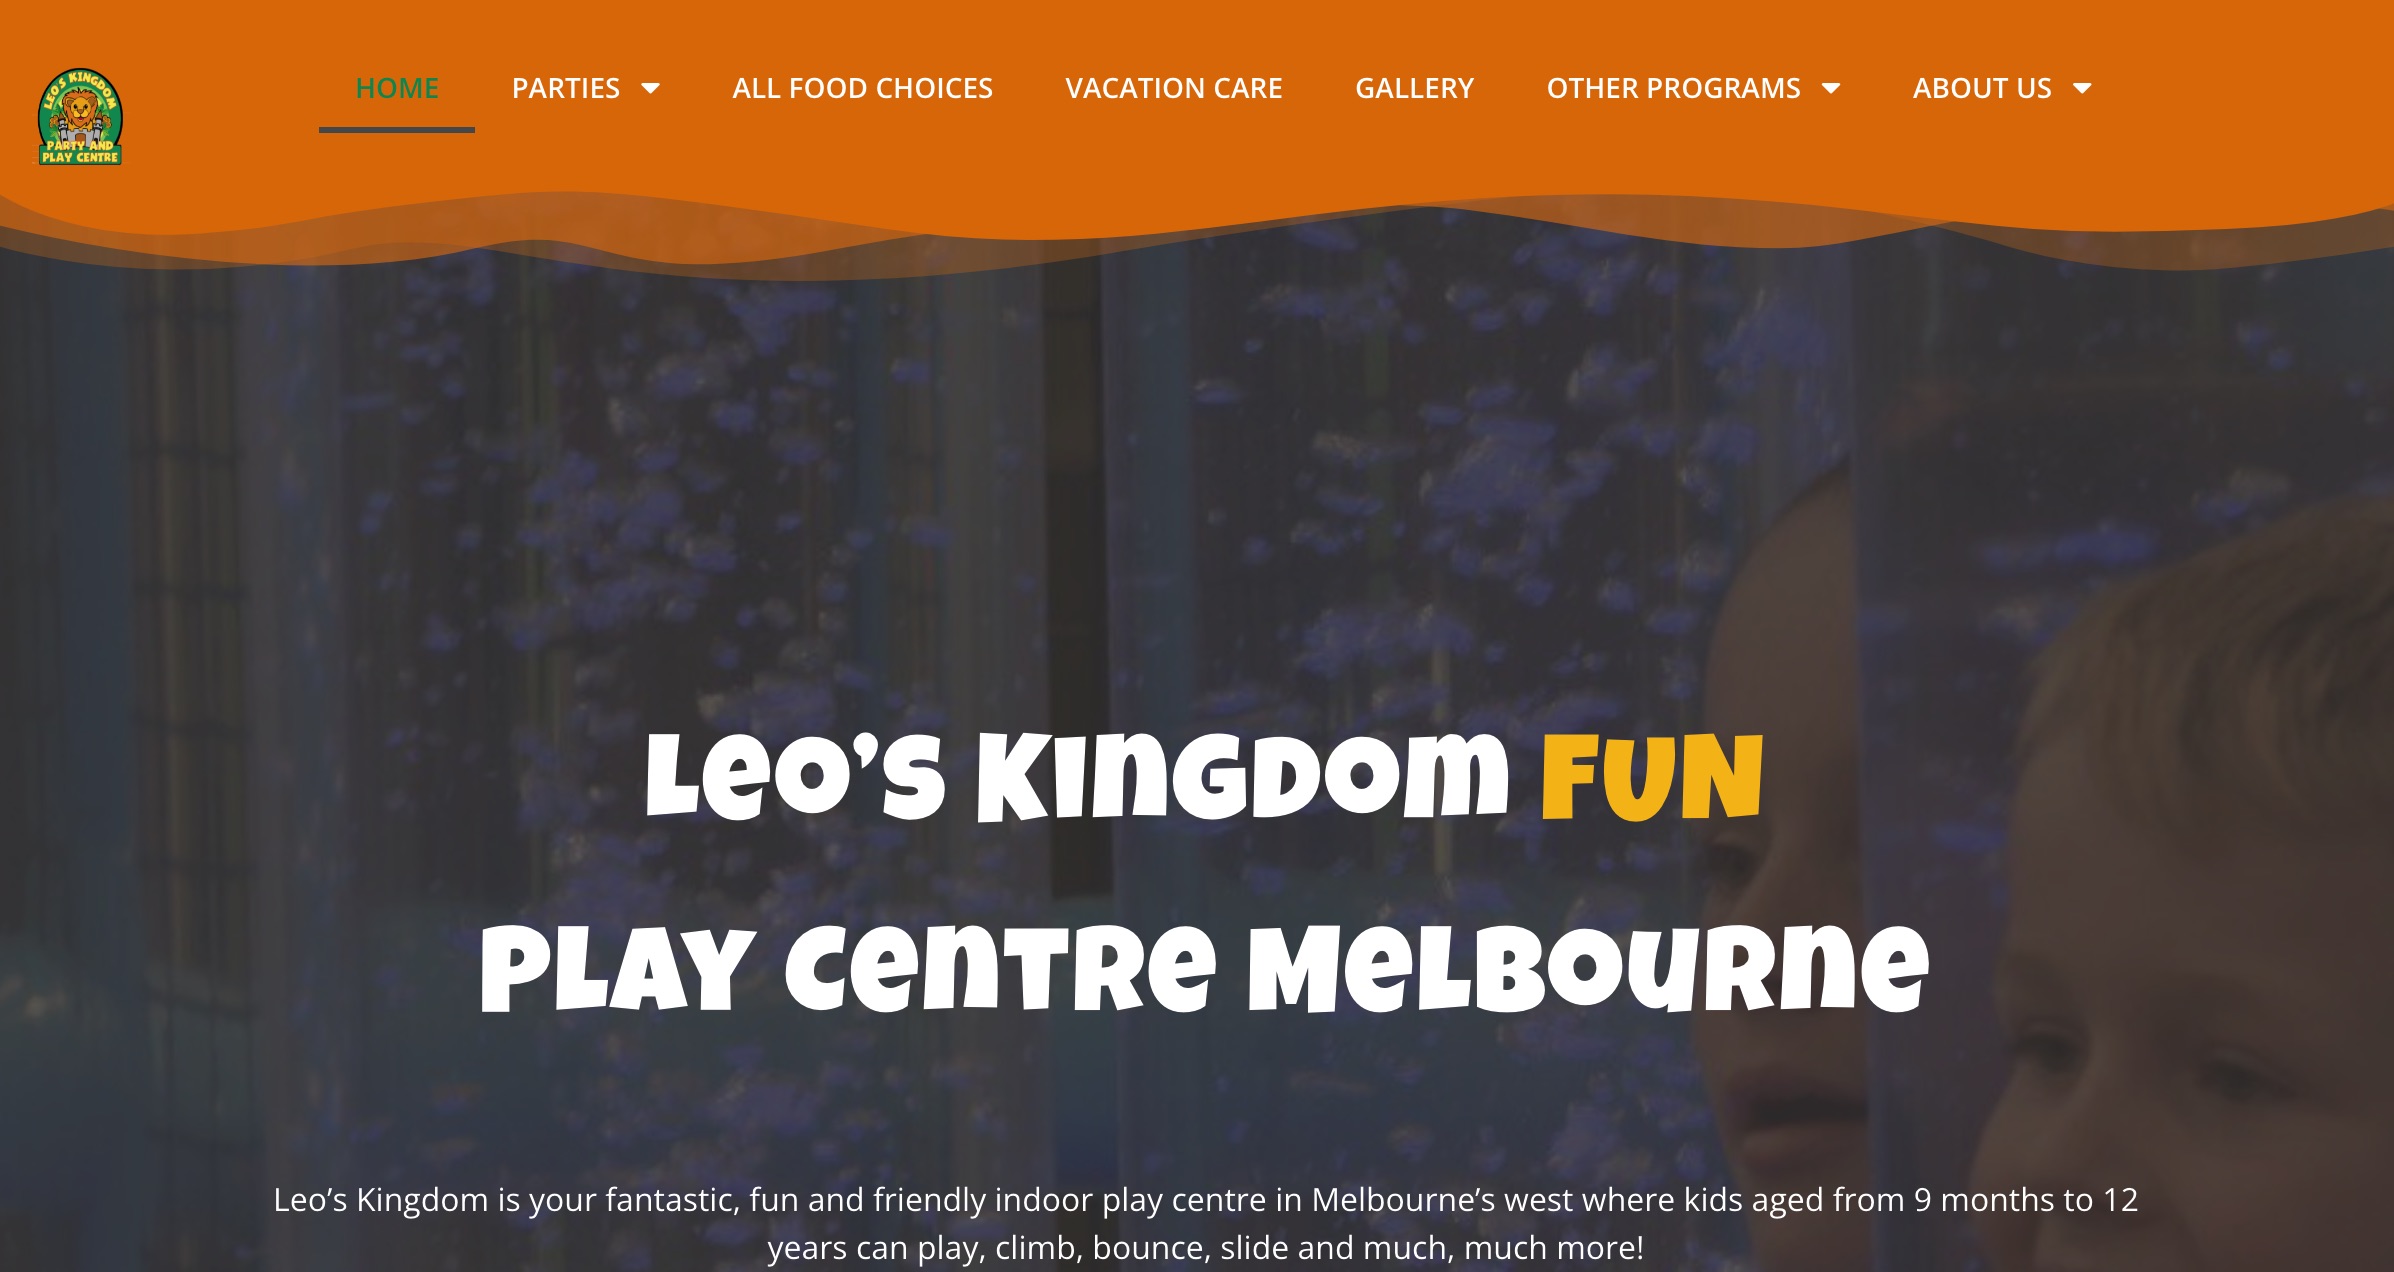 leo's kingdom party & play centre melbourne